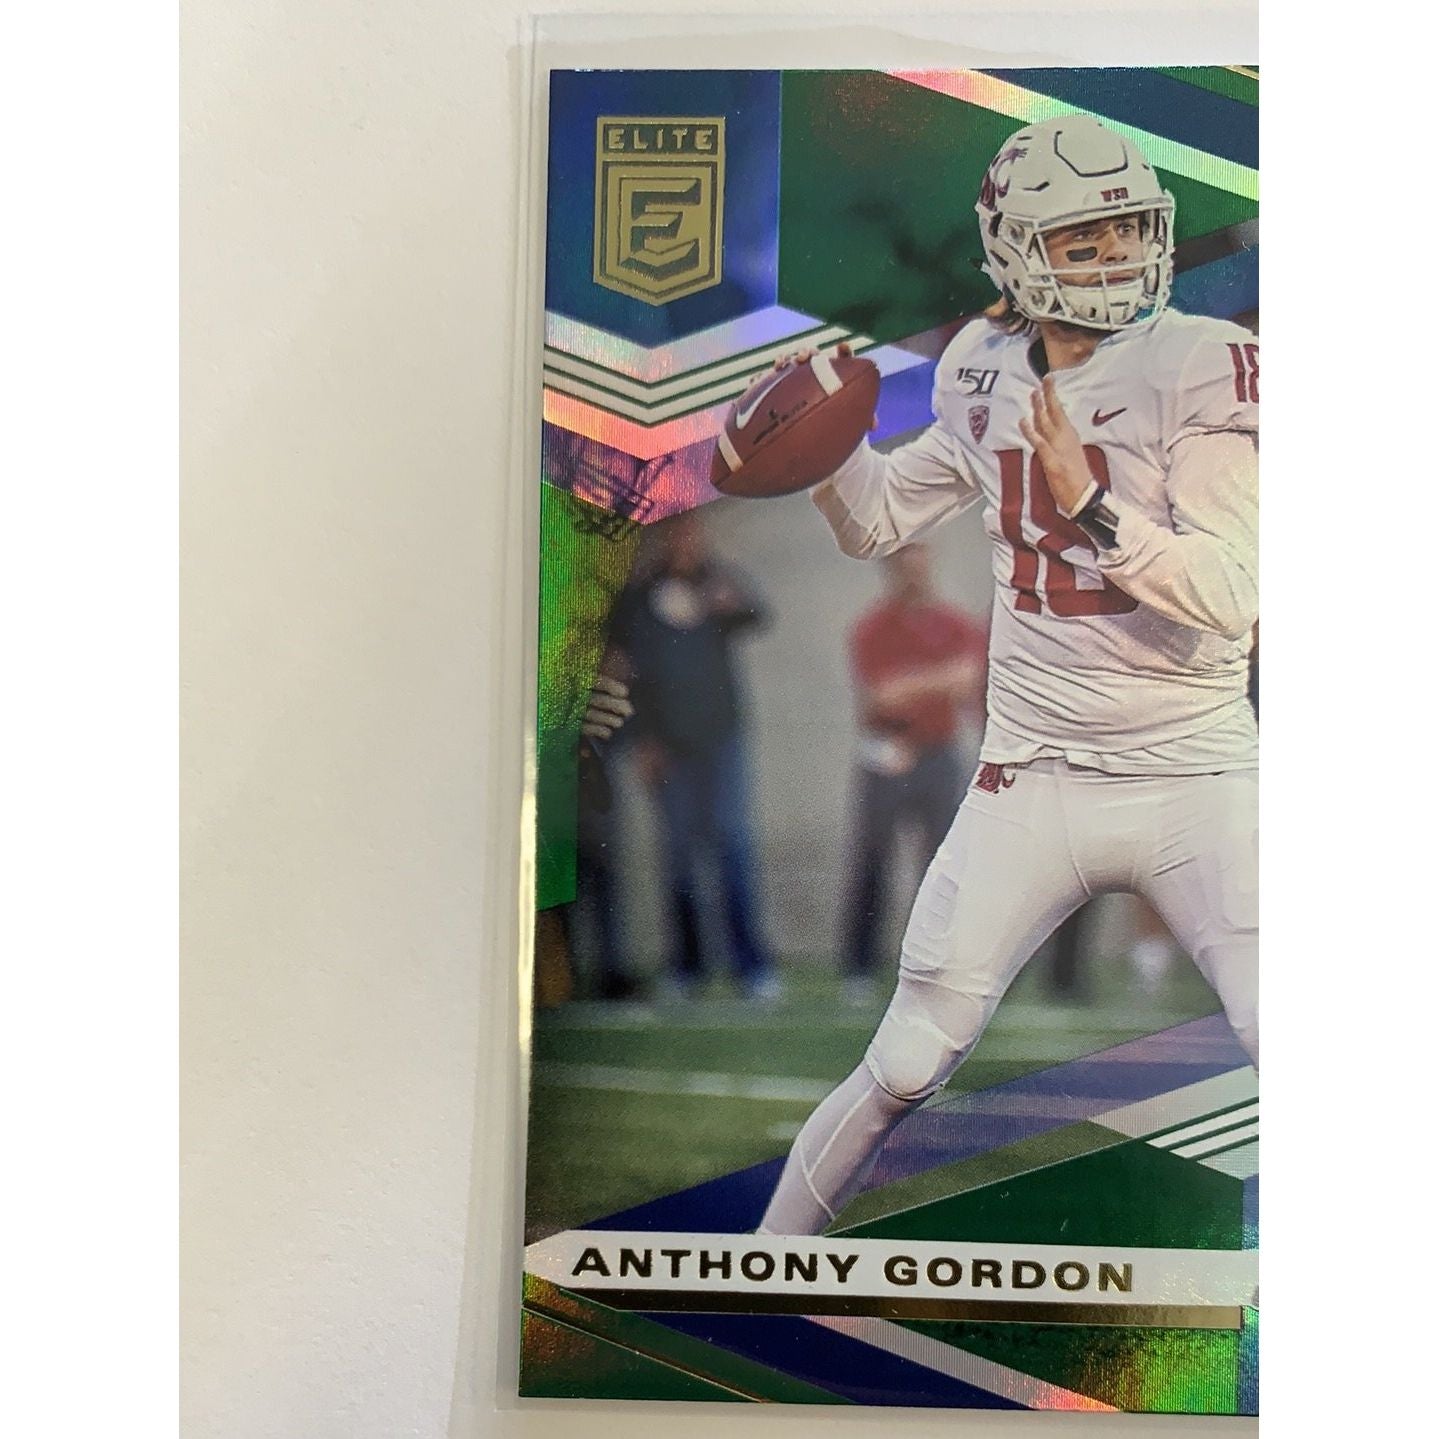  2020 Donruss Elite Anthony Gordon RC Green Foil  Local Legends Cards & Collectibles